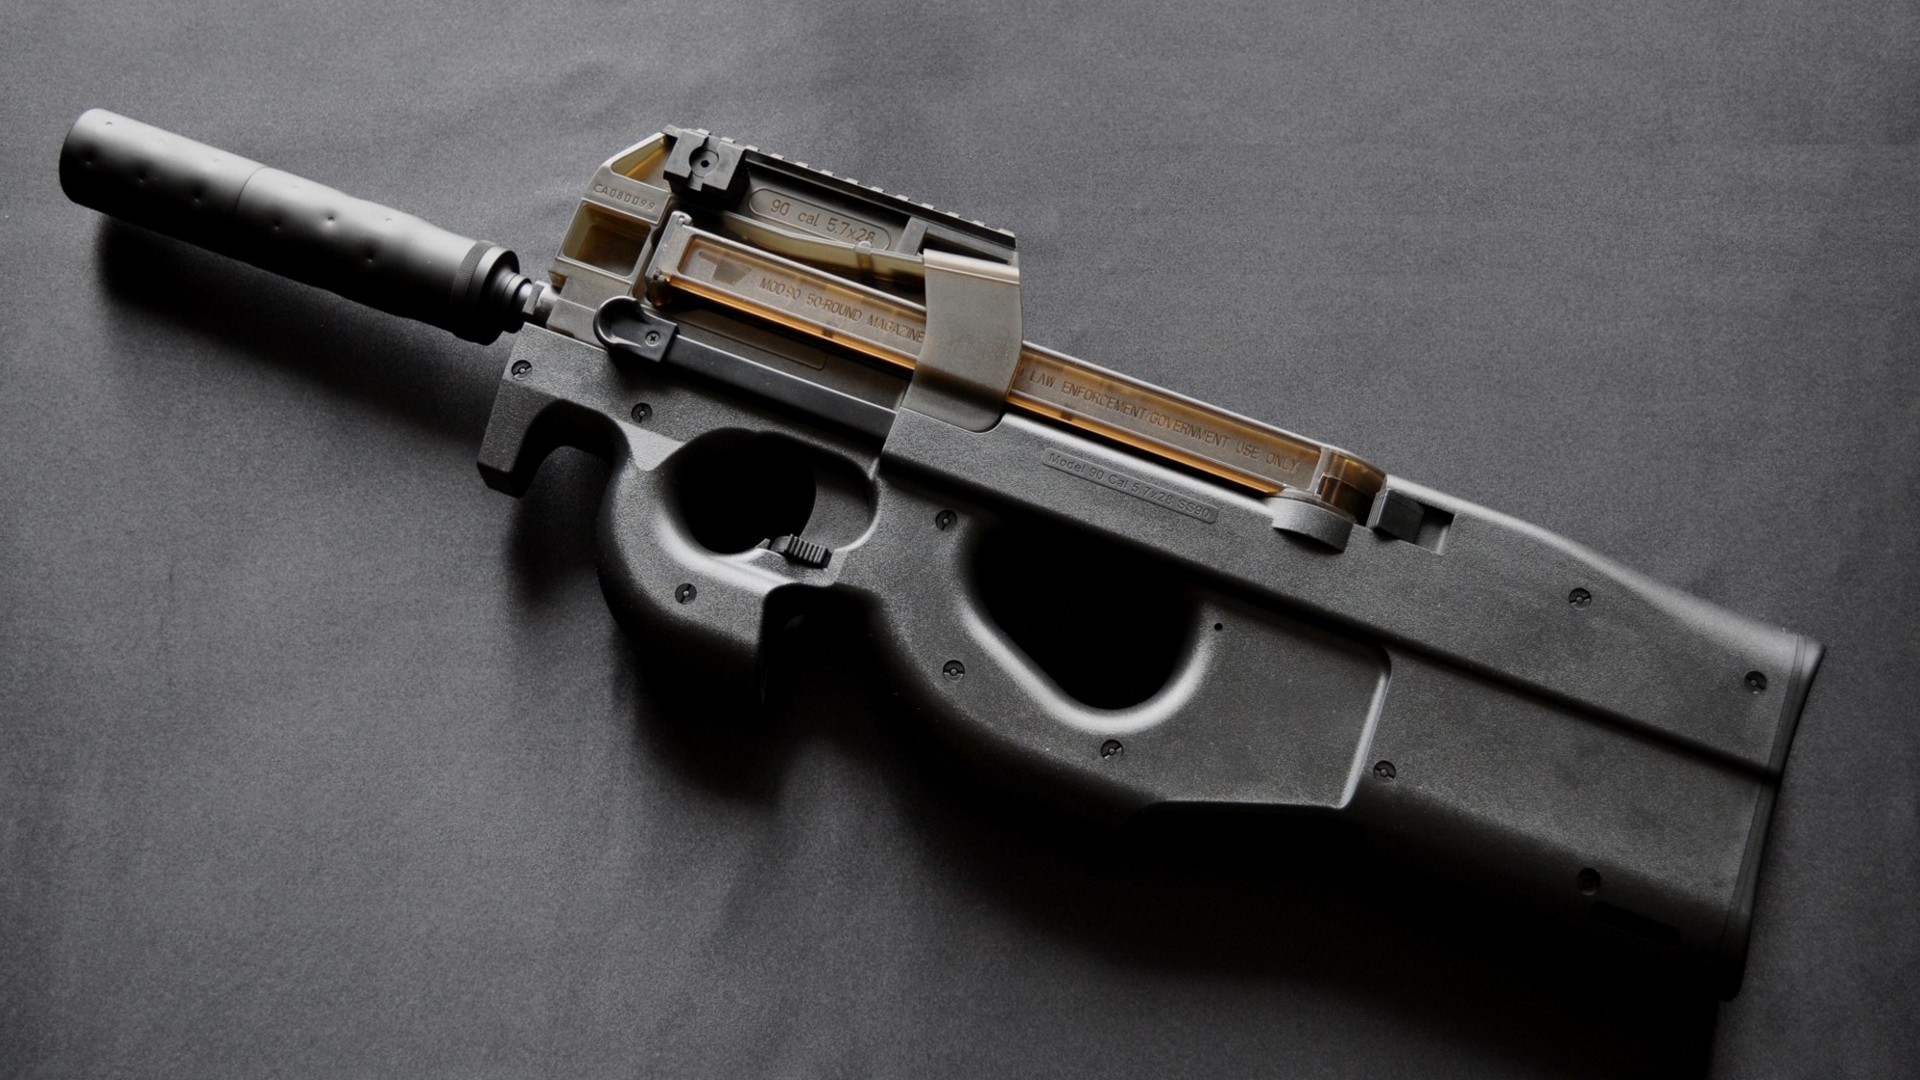 General 1920x1080 gun weapon FN P90 supressor gray FN Herstal submachine gun Belgian firearms